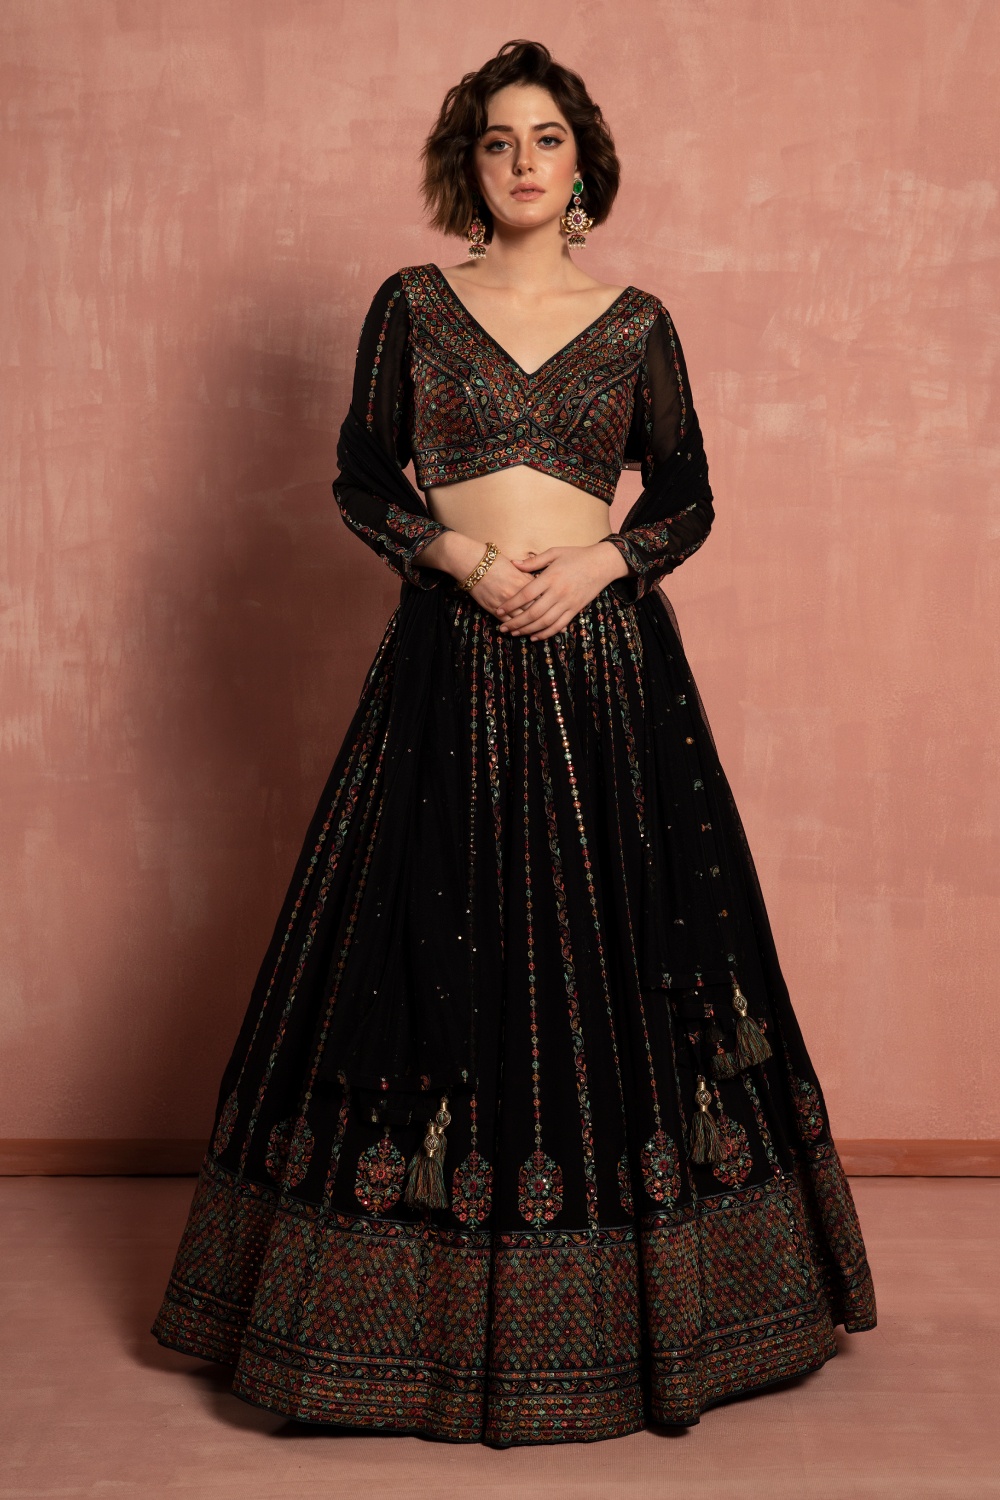 Casual Wear Lehengas - Laid-Back Elegance for Everyday - Seasons India